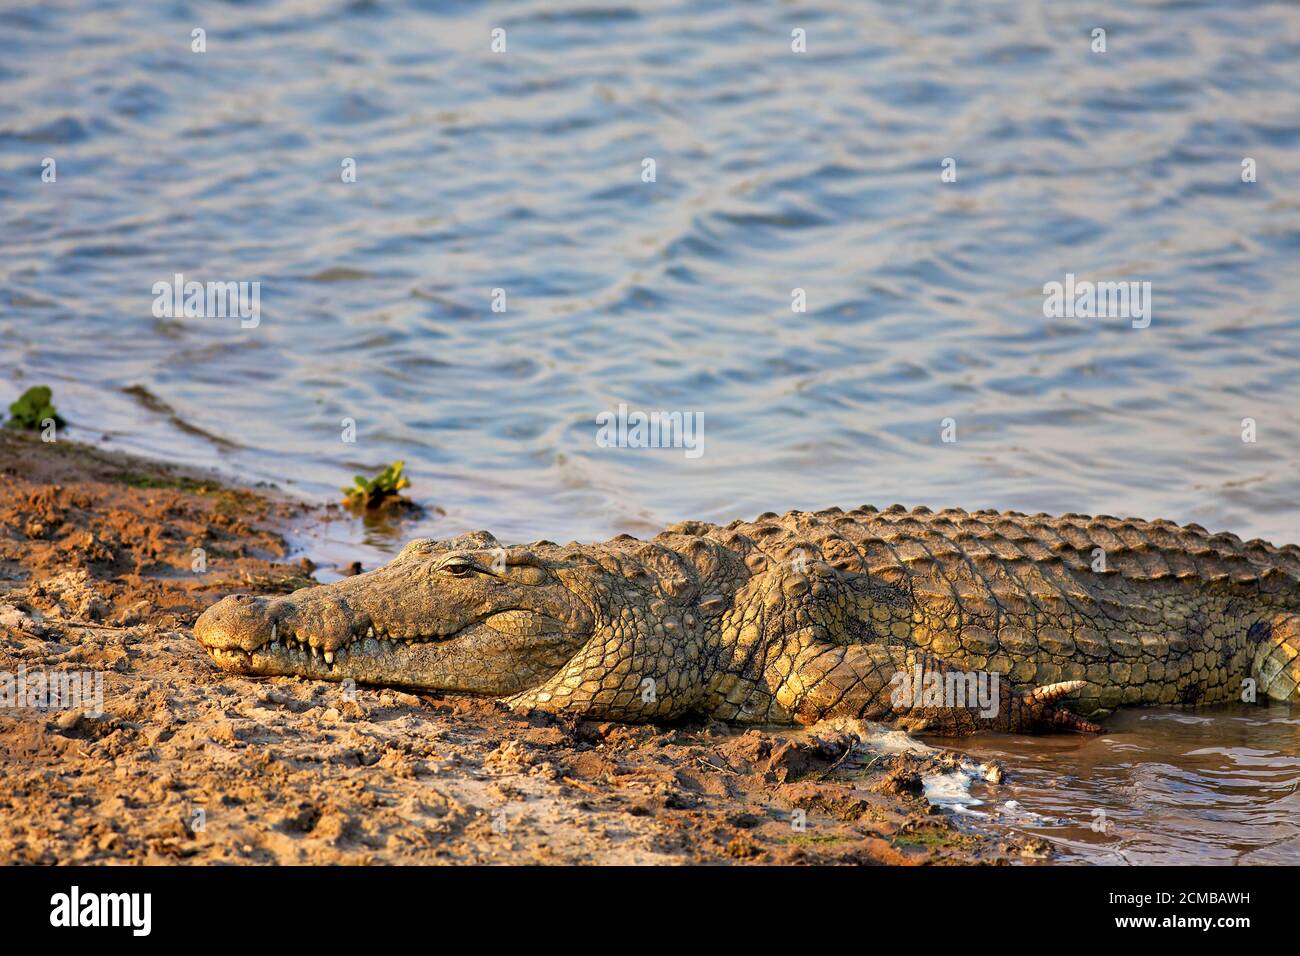 Nile Crocodile Stock Photo